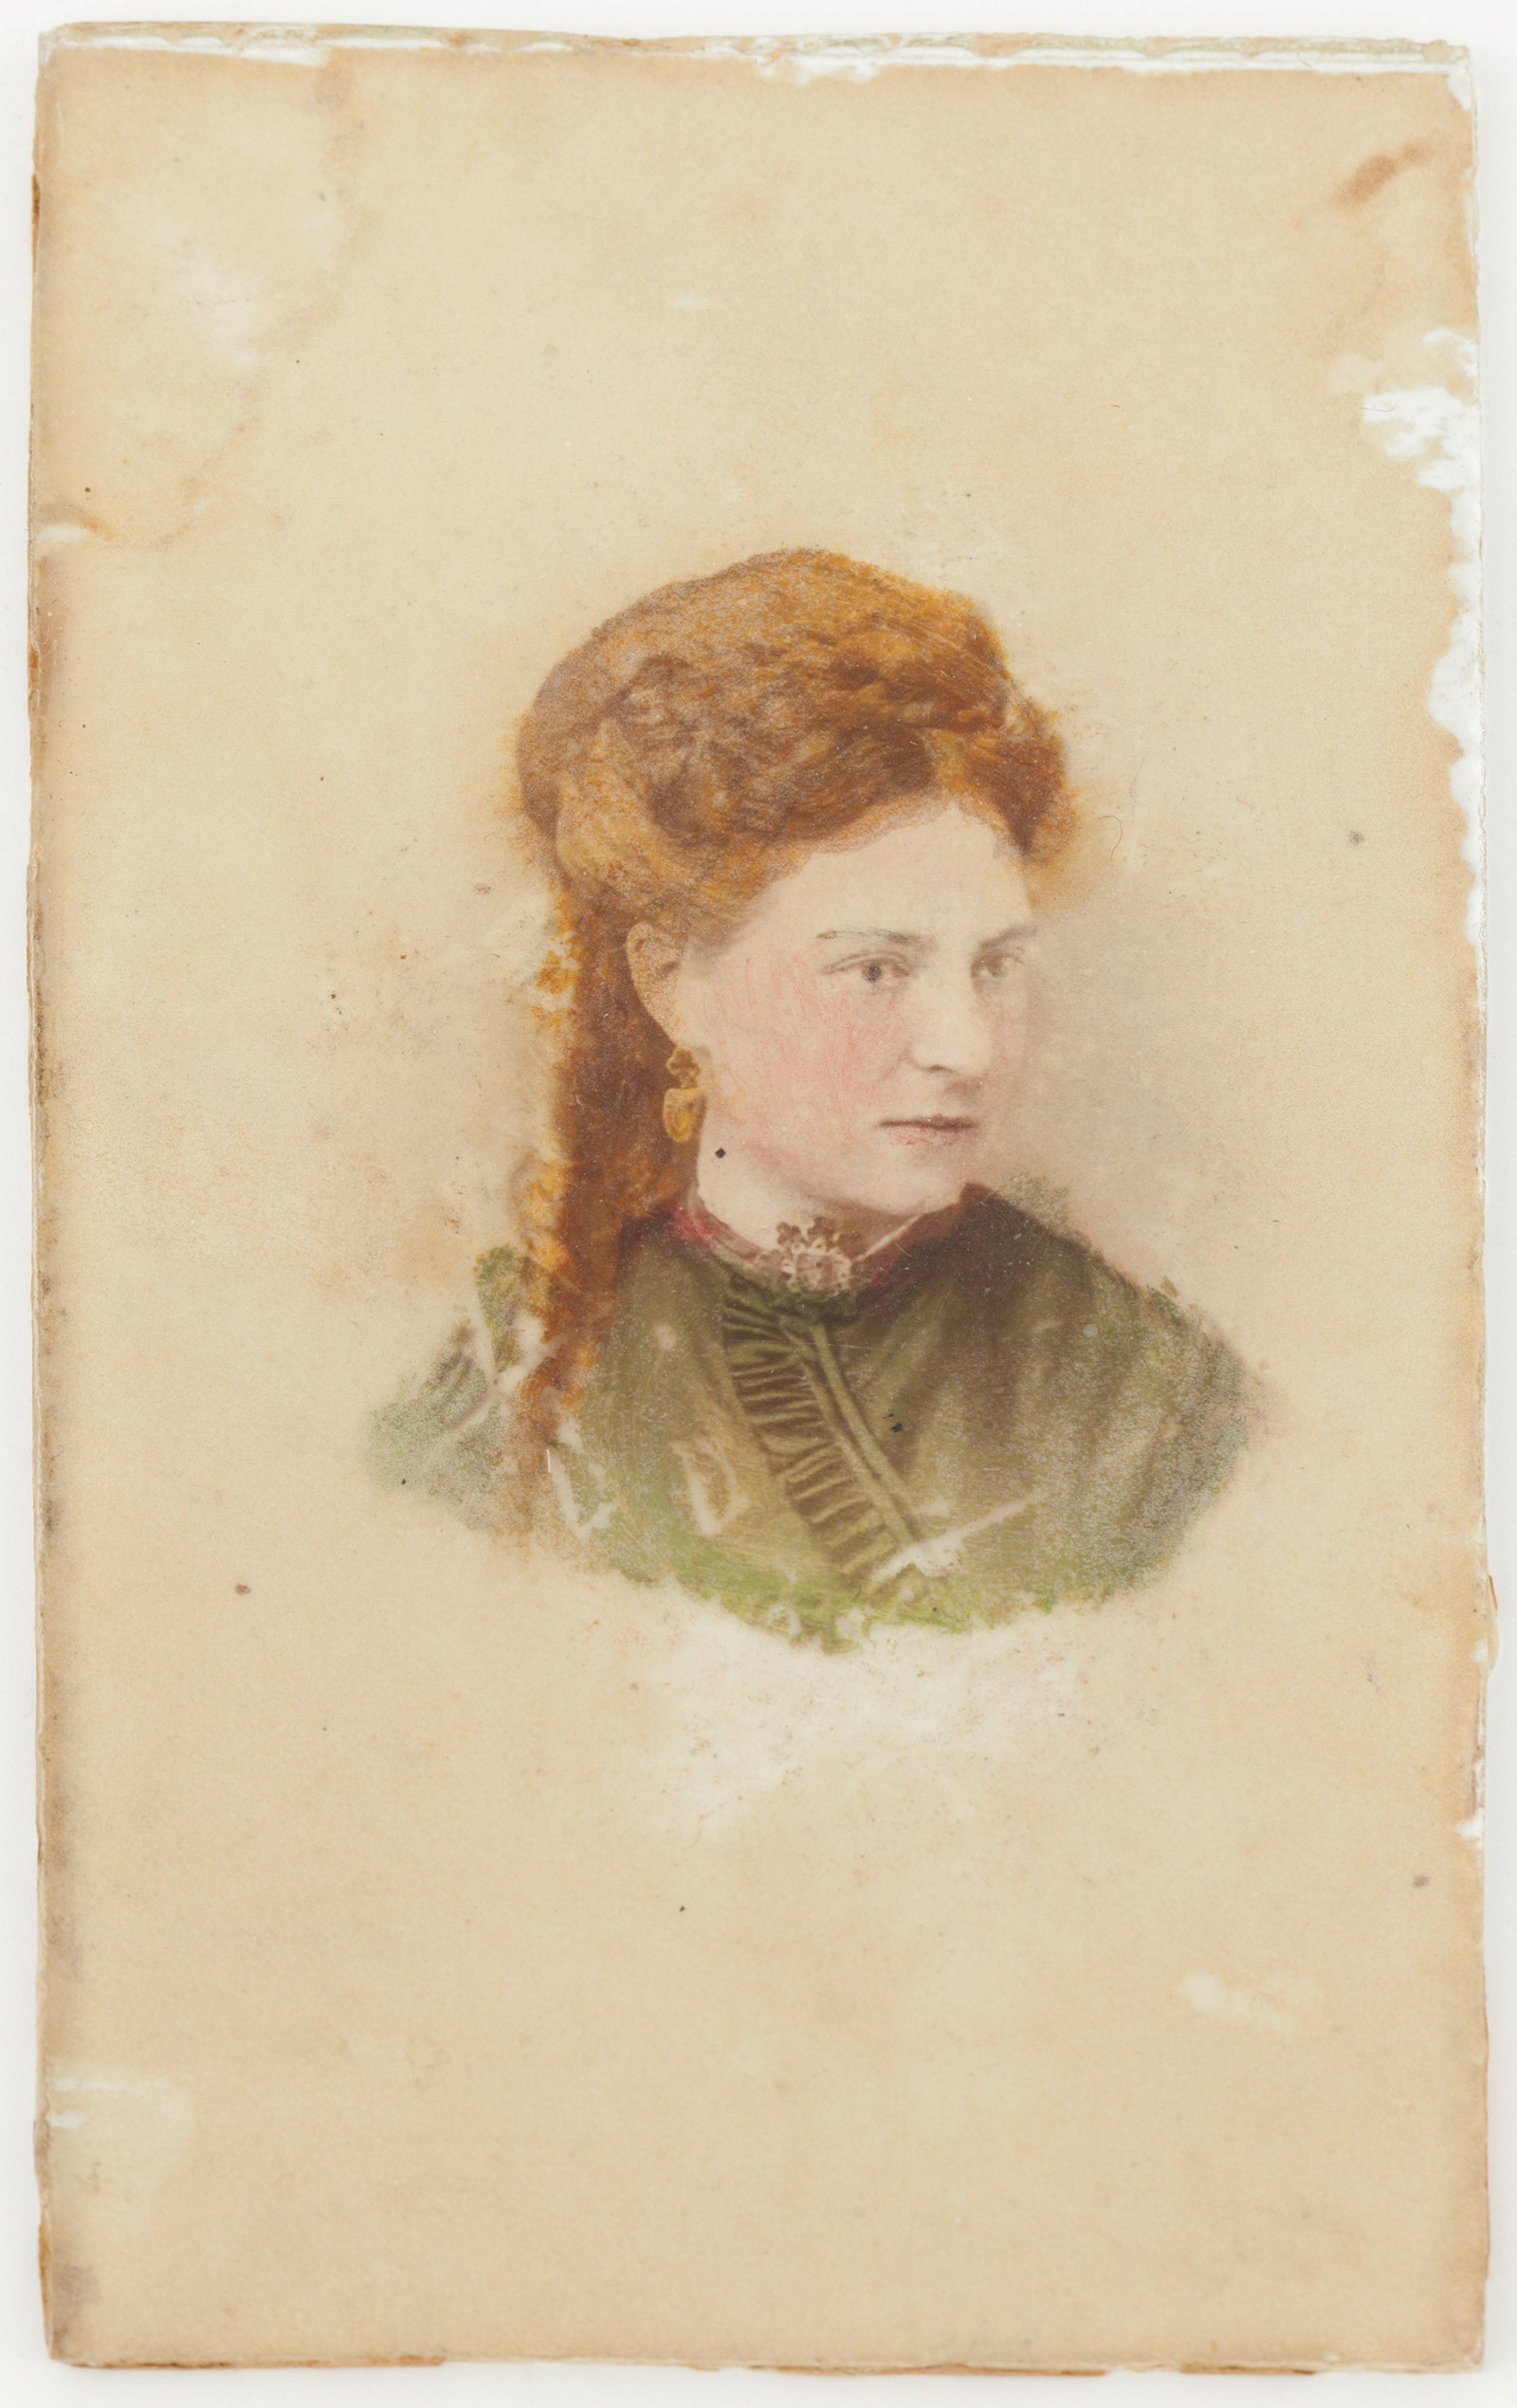 Hand-coloured photograph of Bessie Buchanan, 1870s